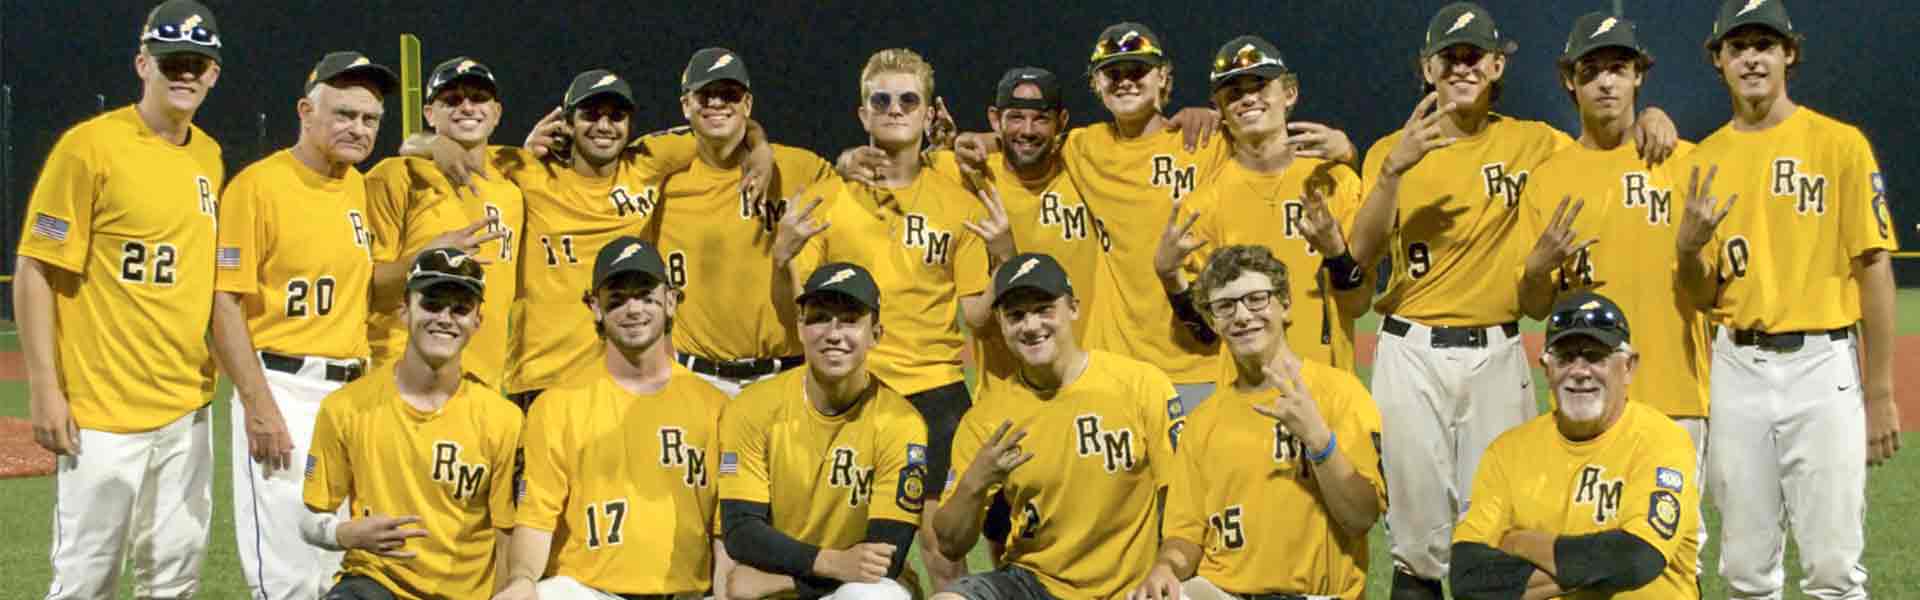 2021 Rayson-Miller Baseball Team